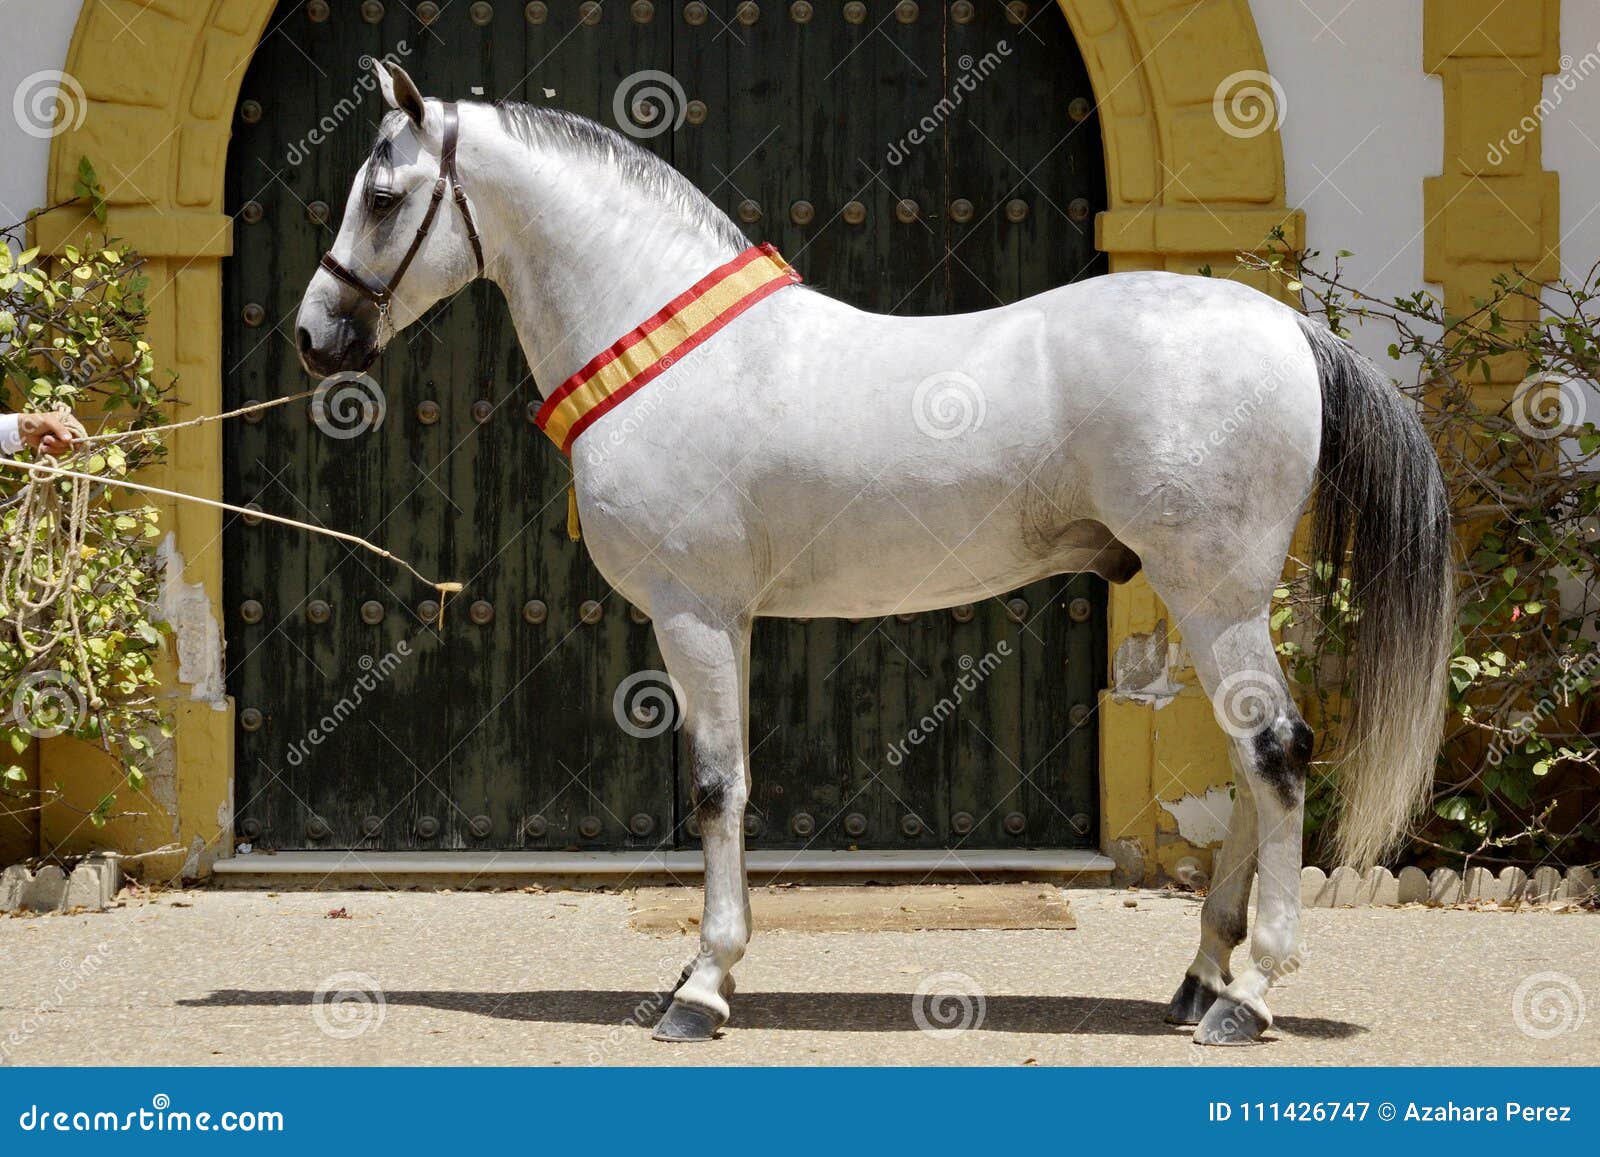 hispano arabian stallion champion in jerez horse fair